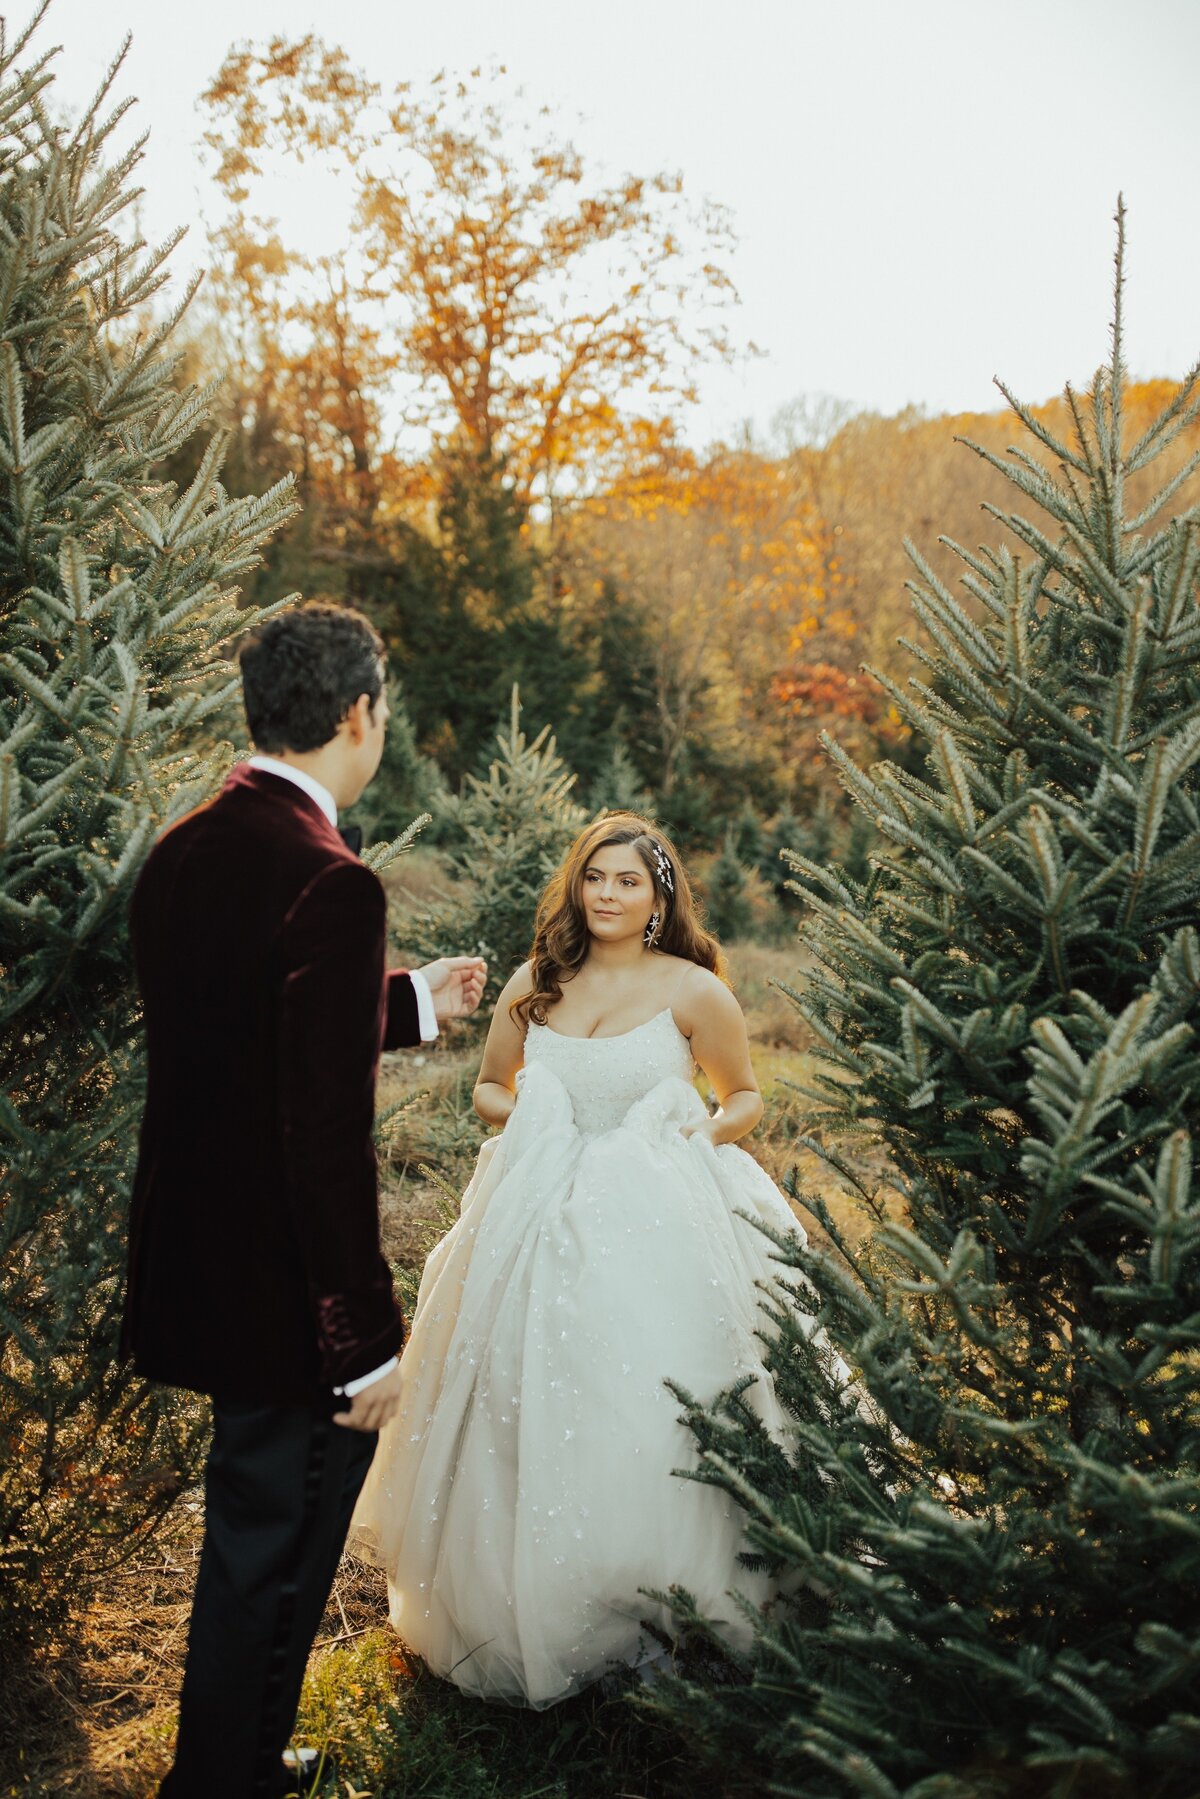 Christy-l-Johnston-Photography-Monica-Relyea-Events-Noelle-Downing-Instagram-Noelle_s-Favorite-Day-Wedding-Battenfelds-Christmas-tree-farm-Red-Hook-New-York-Hudson-Valley-upstate-november-2019-IMG_6611